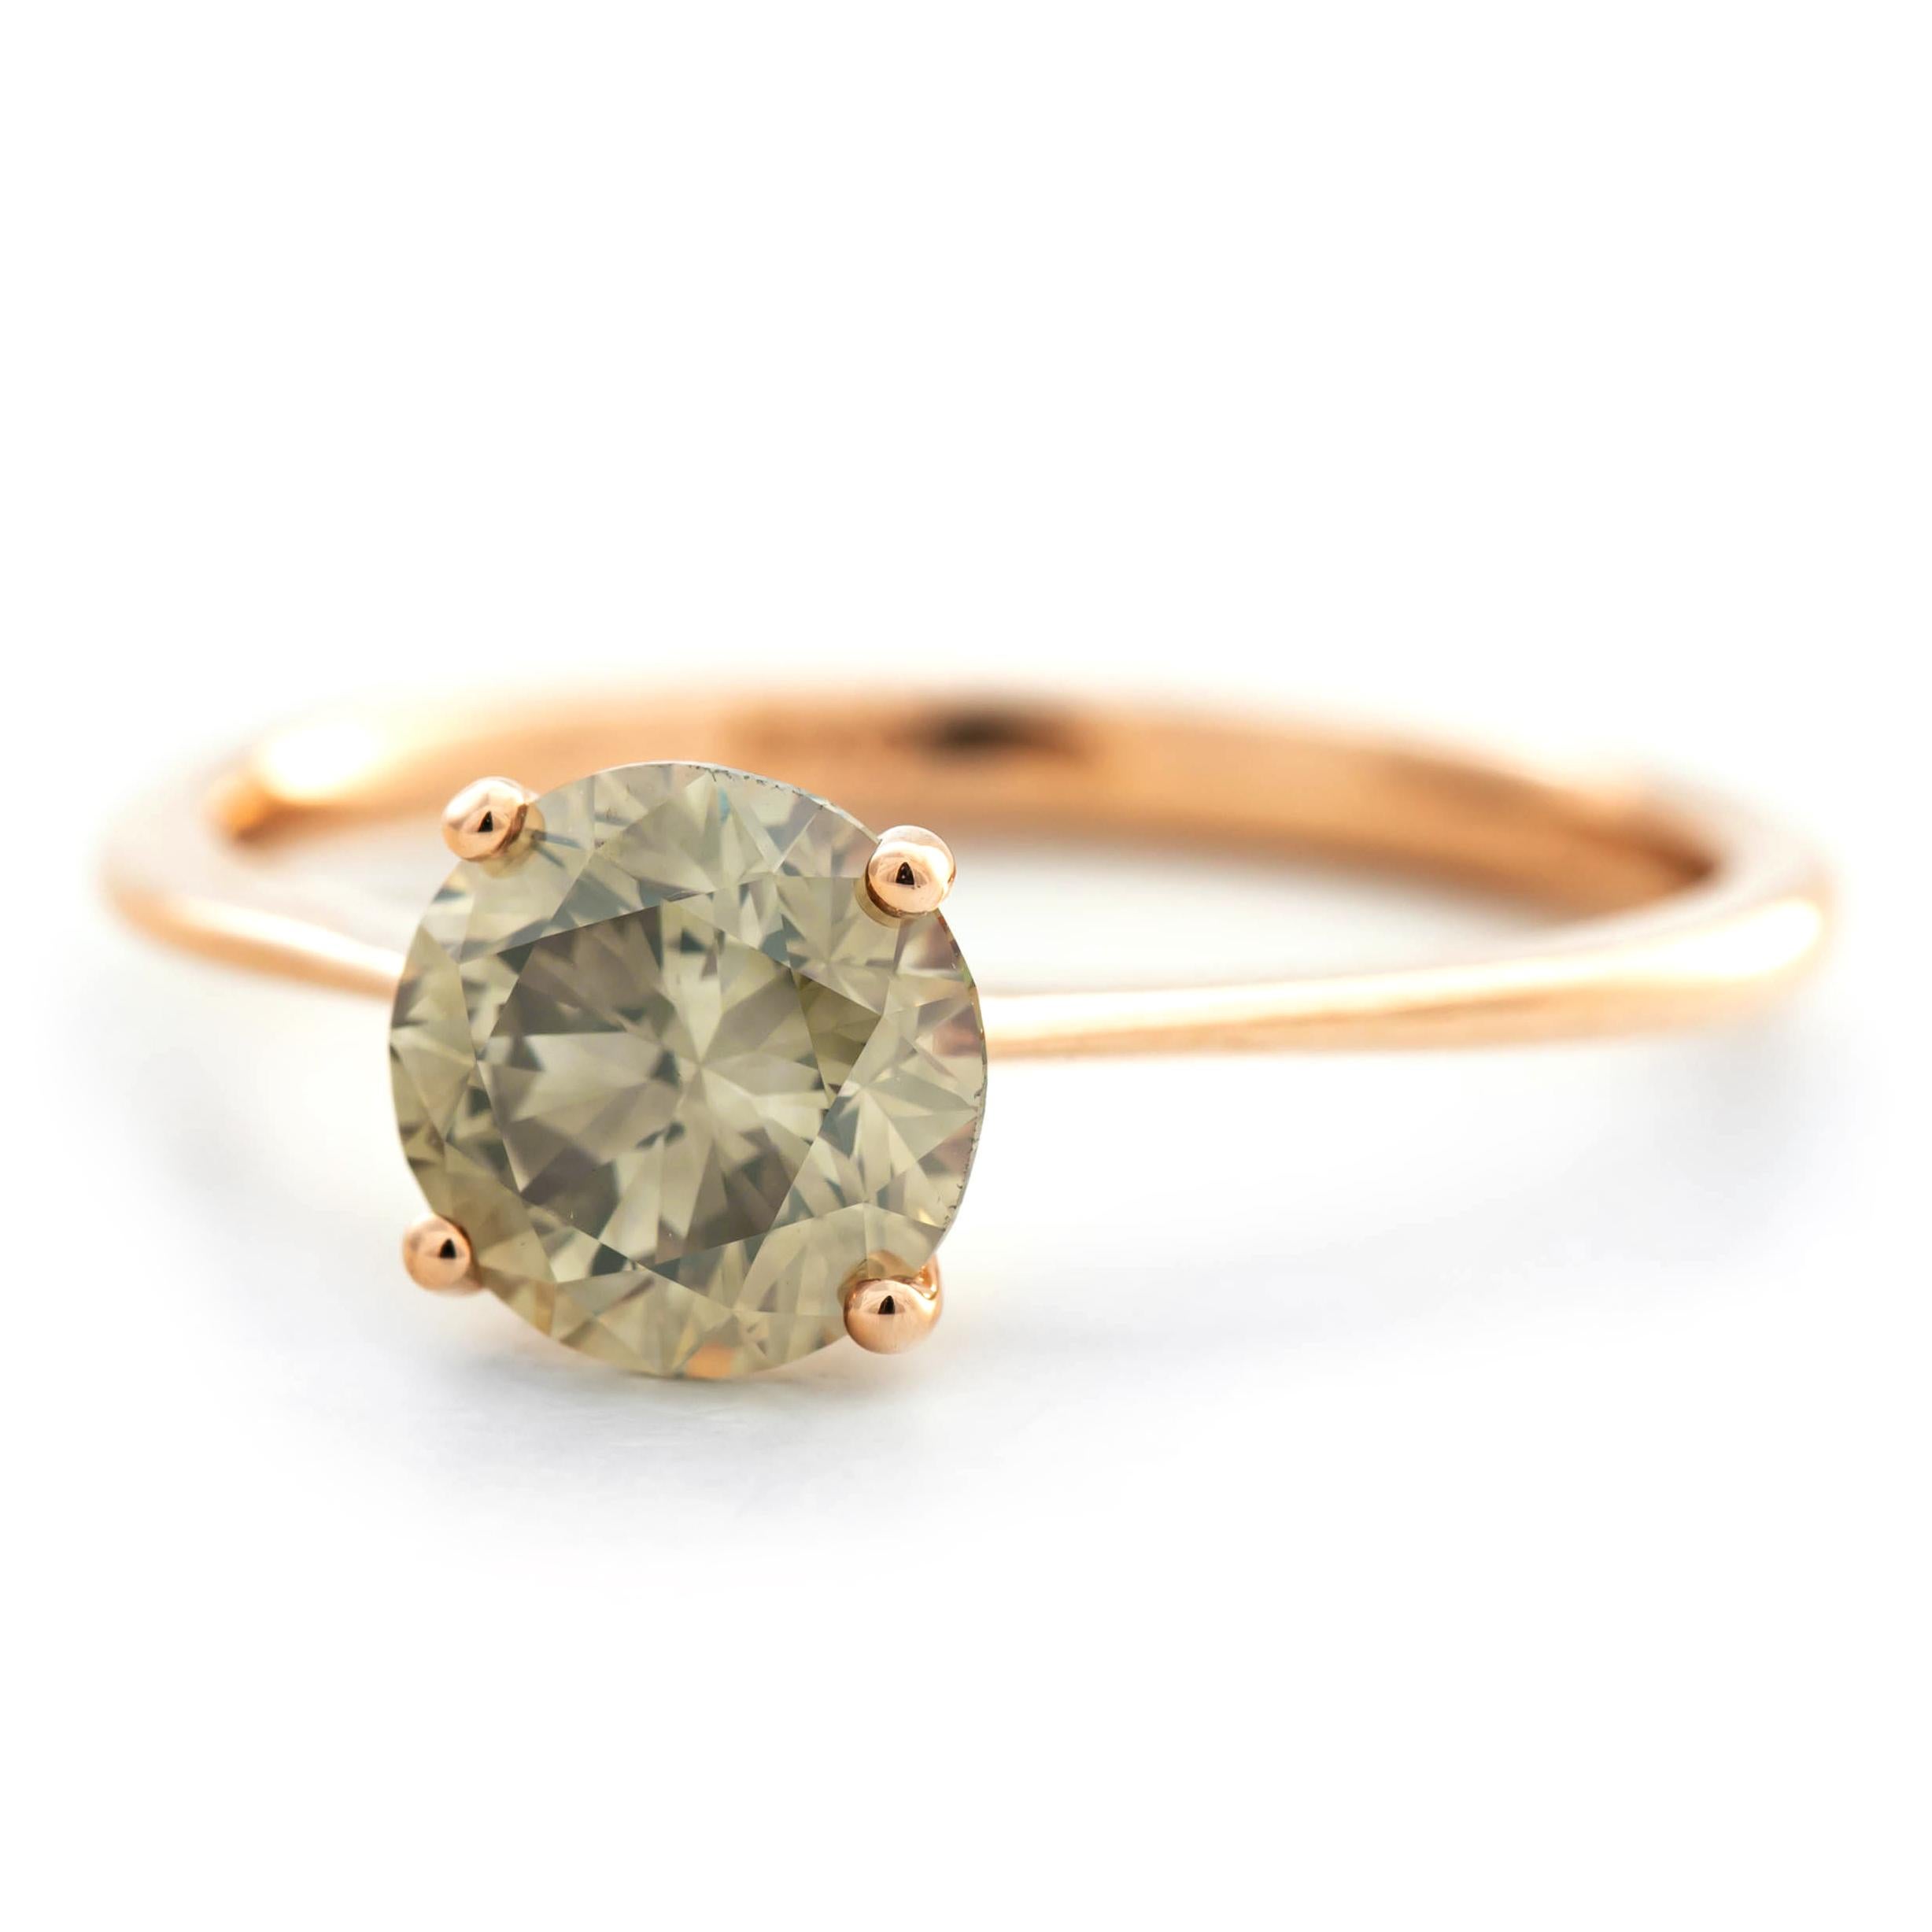 Round Cut 1.22 ct Natural Fancy Gray Greenish Yellow Diamond Ring, No Reserve Price